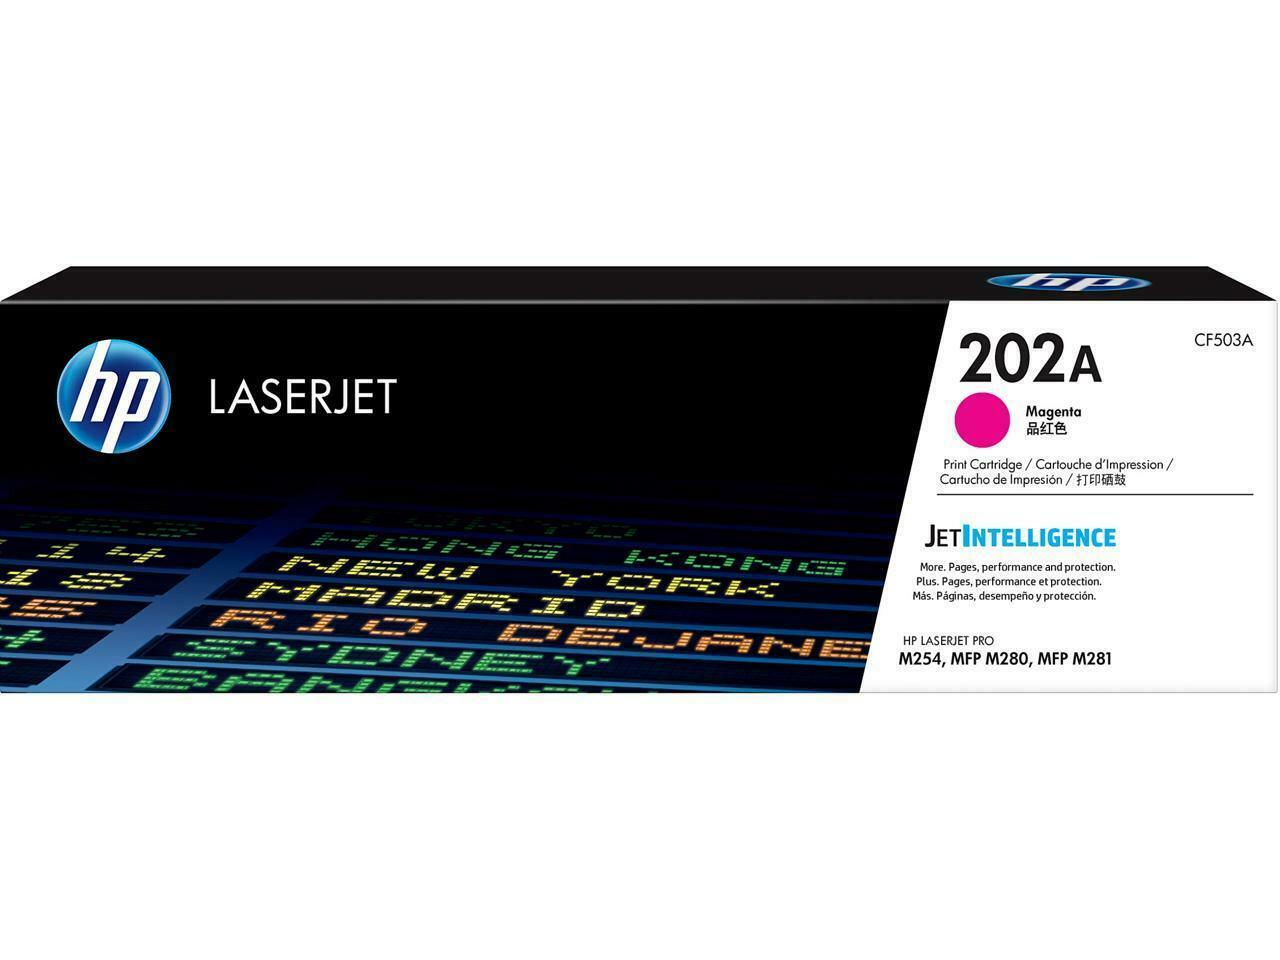 HP 202A LaserJet Toner Cartridge - Magenta